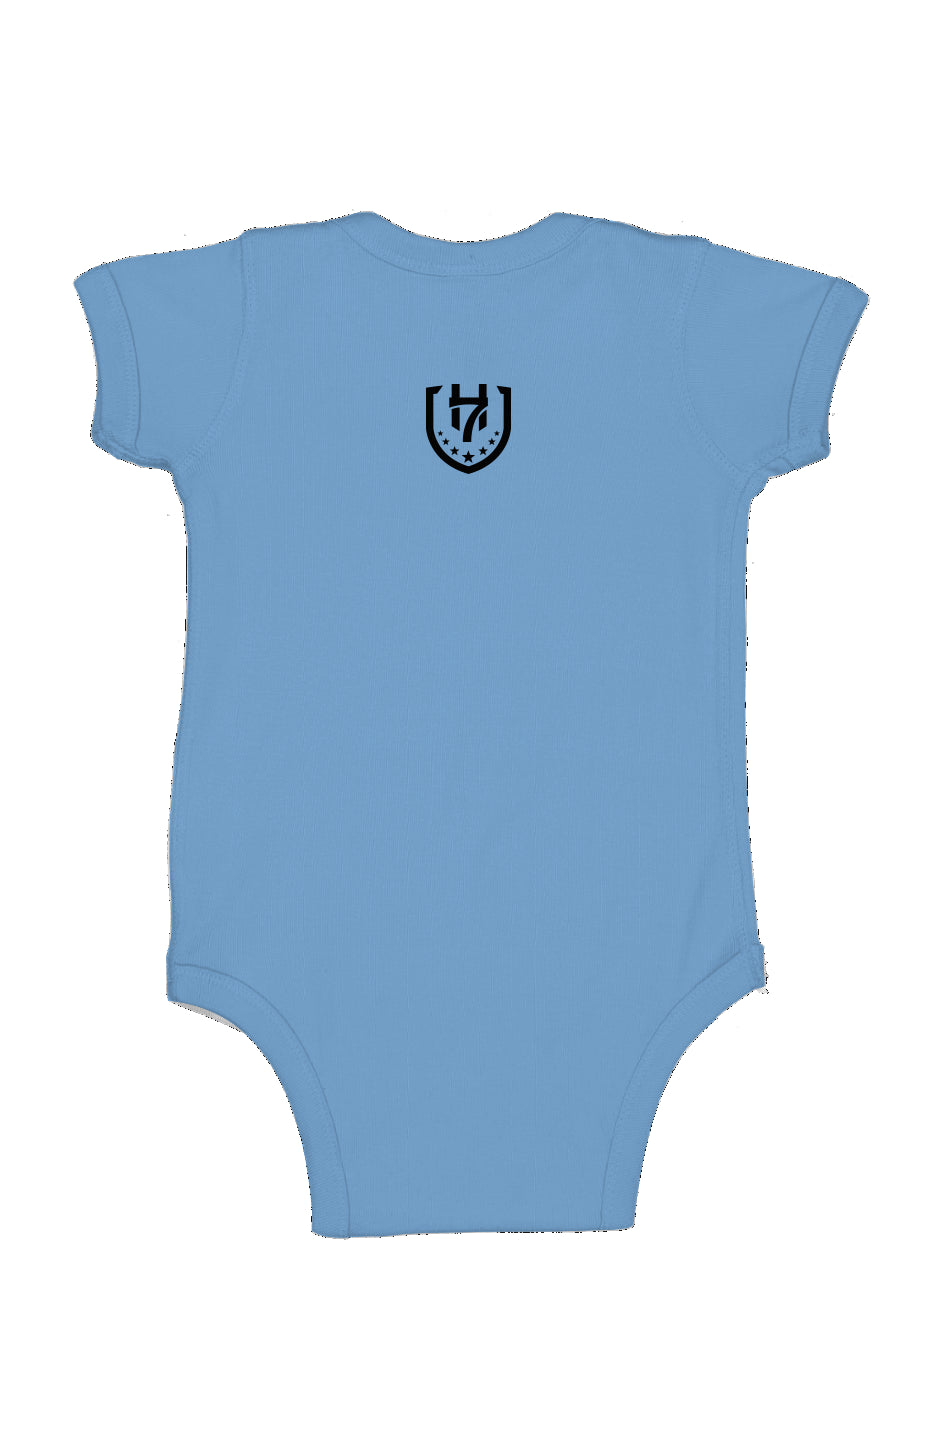 H7 Light Blue Infant Fine Jersey Bodysuit